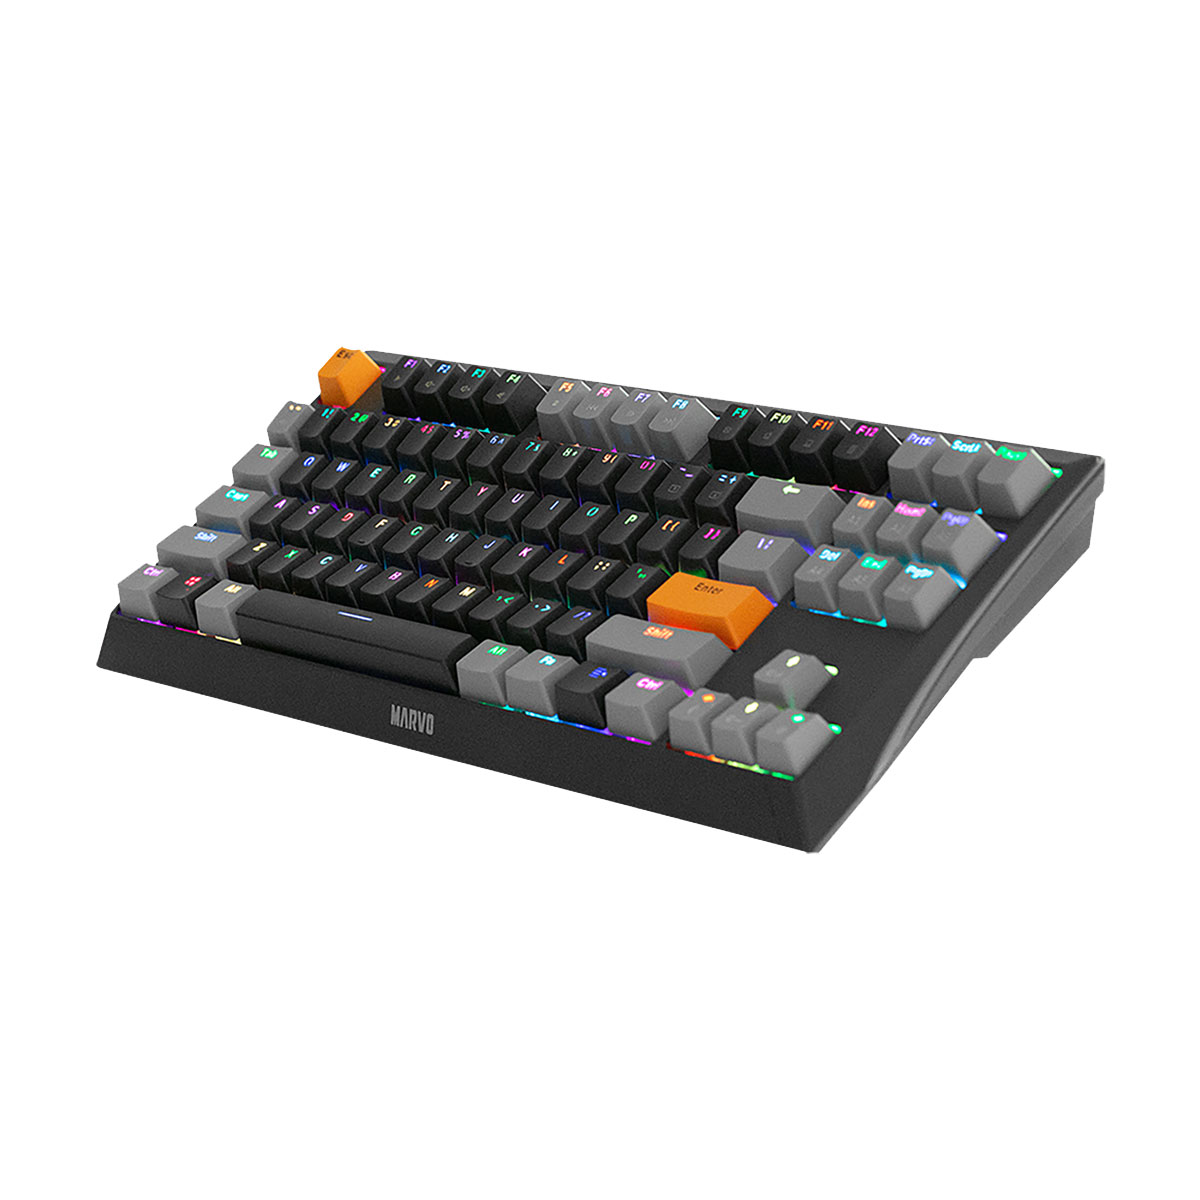 kg980A-keyboard-04